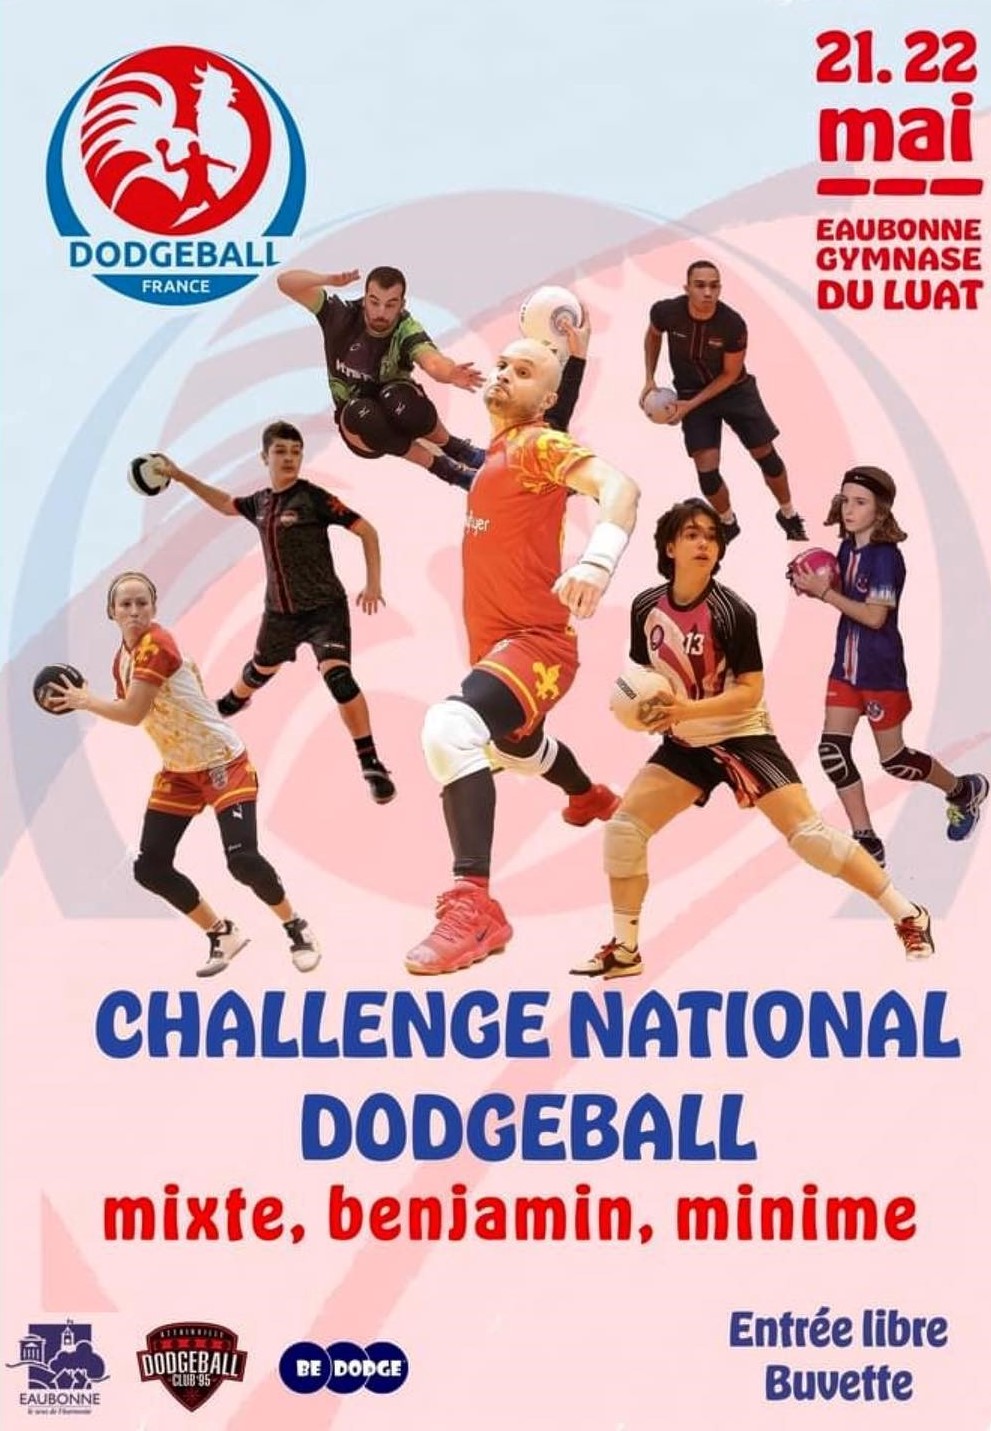 Challenge national de Dodgeball - Eaubonne